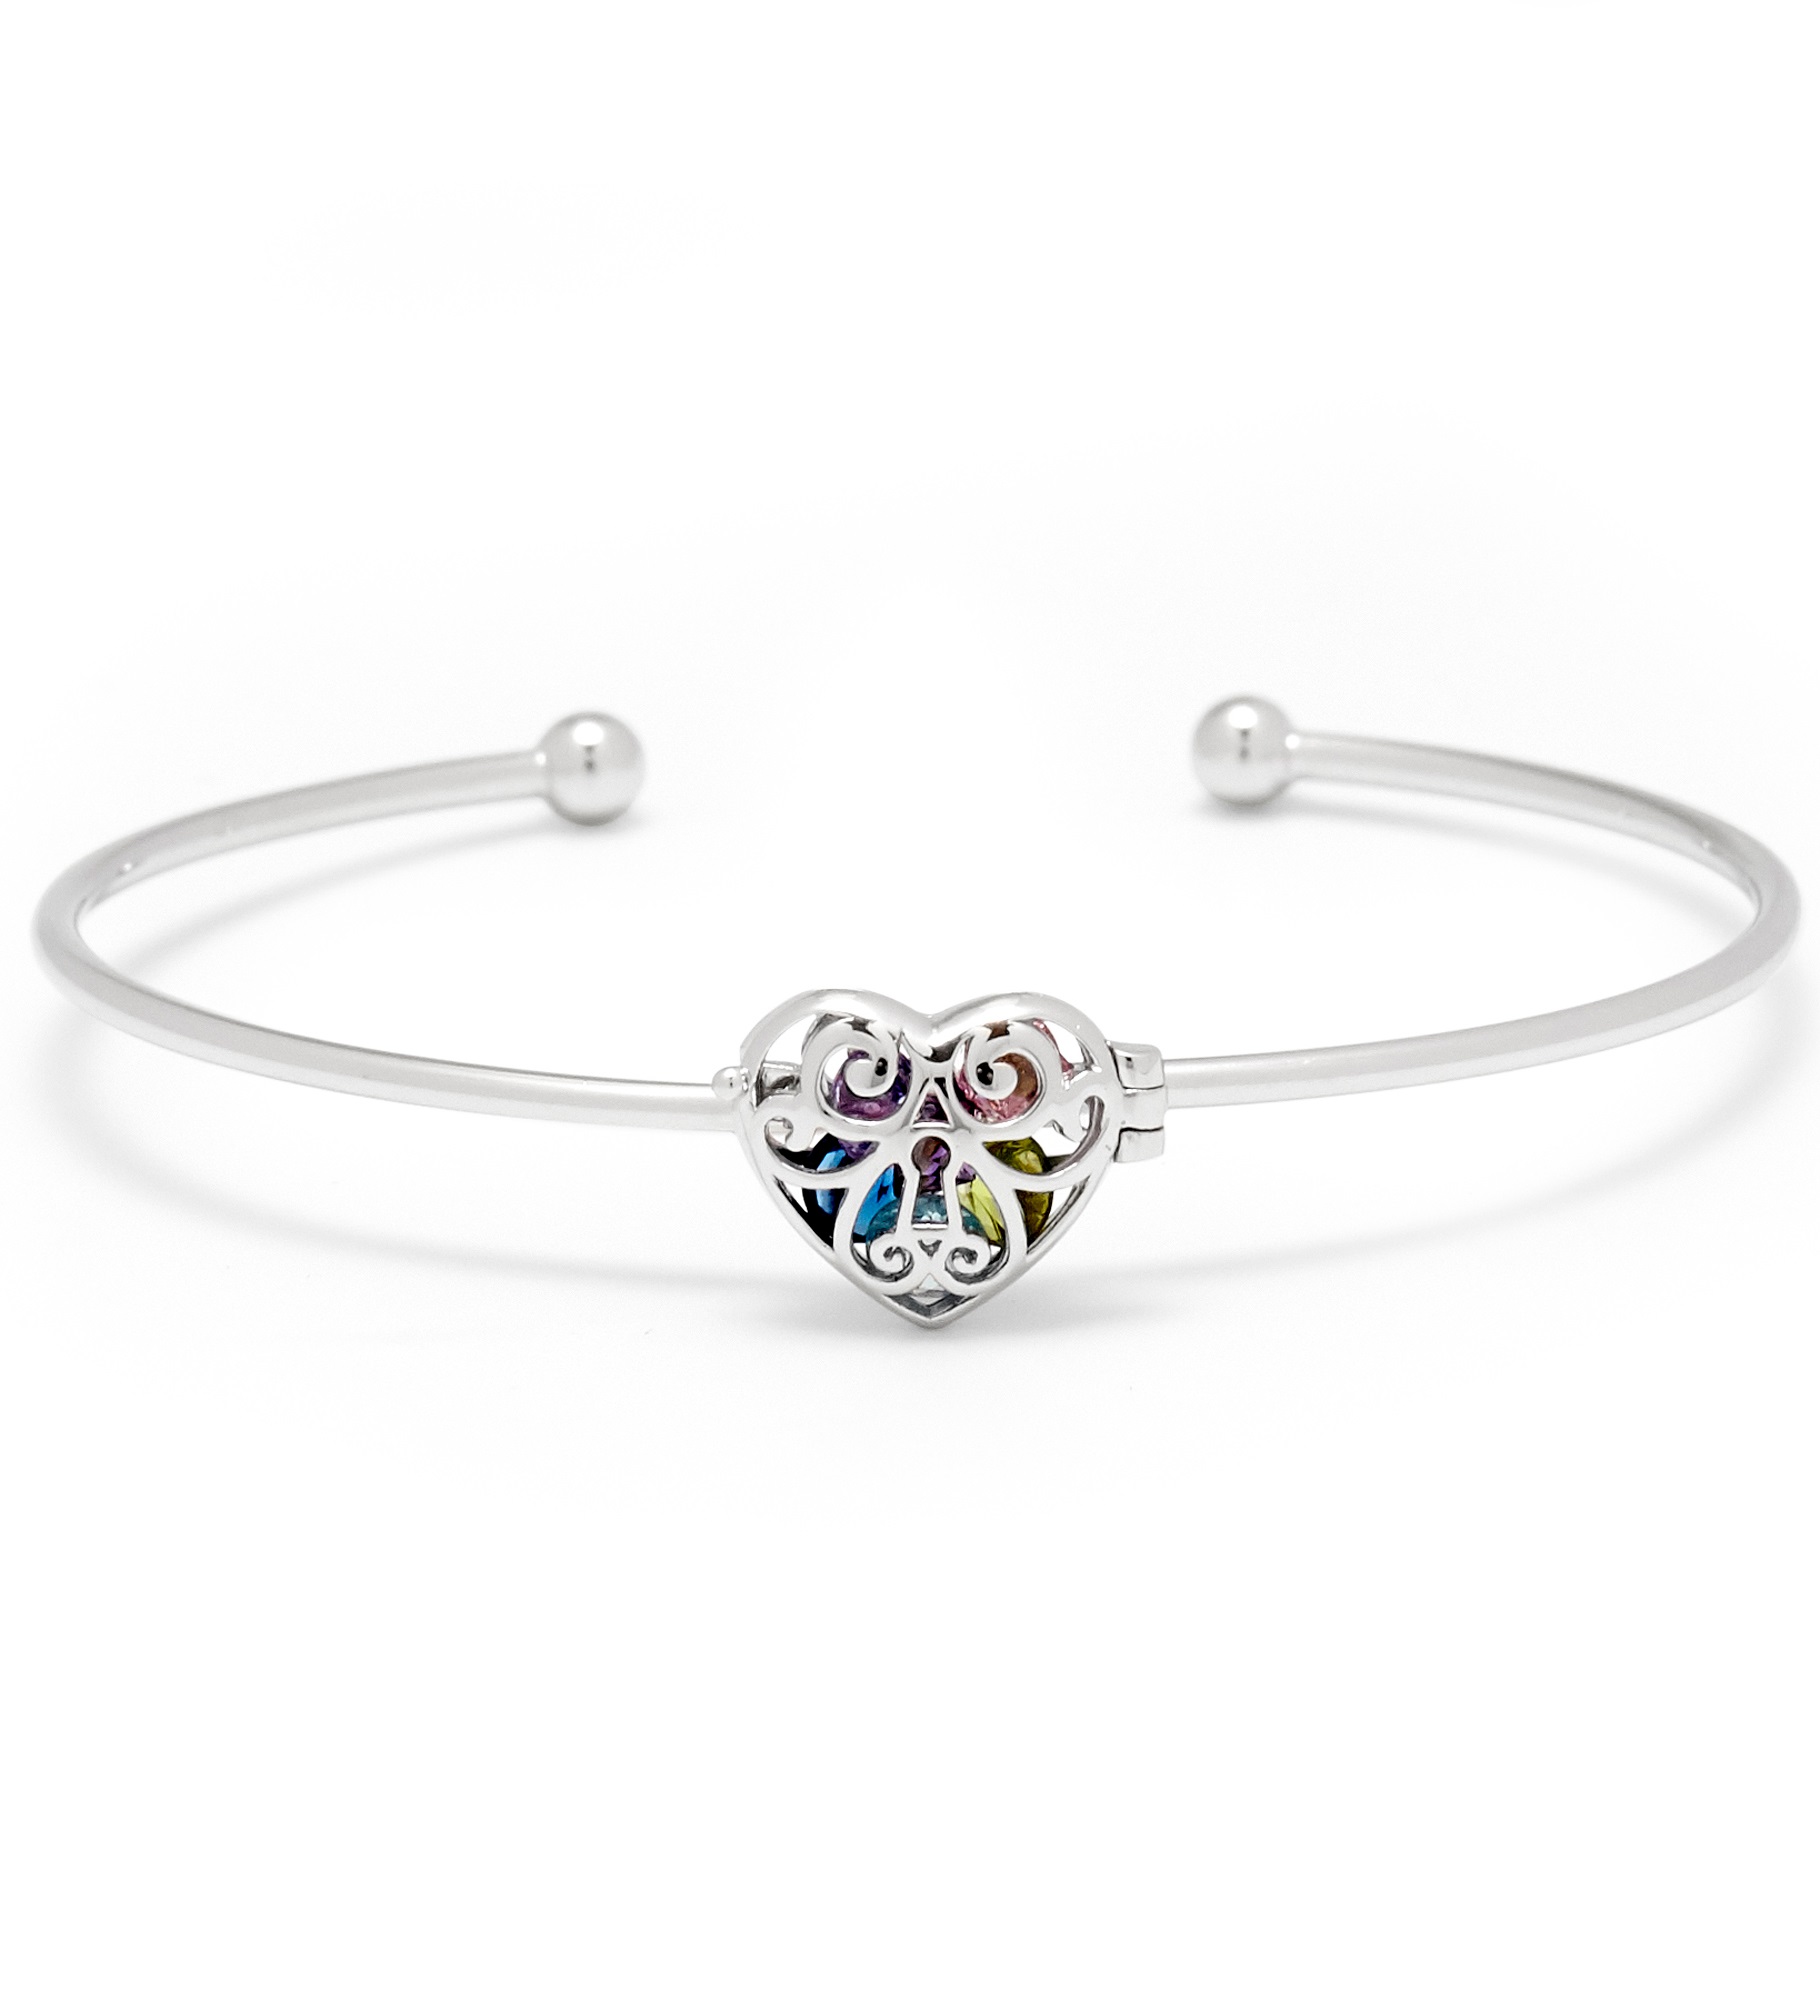 Personalized Interlocking Hearts Birthstone Cuff Bracelet